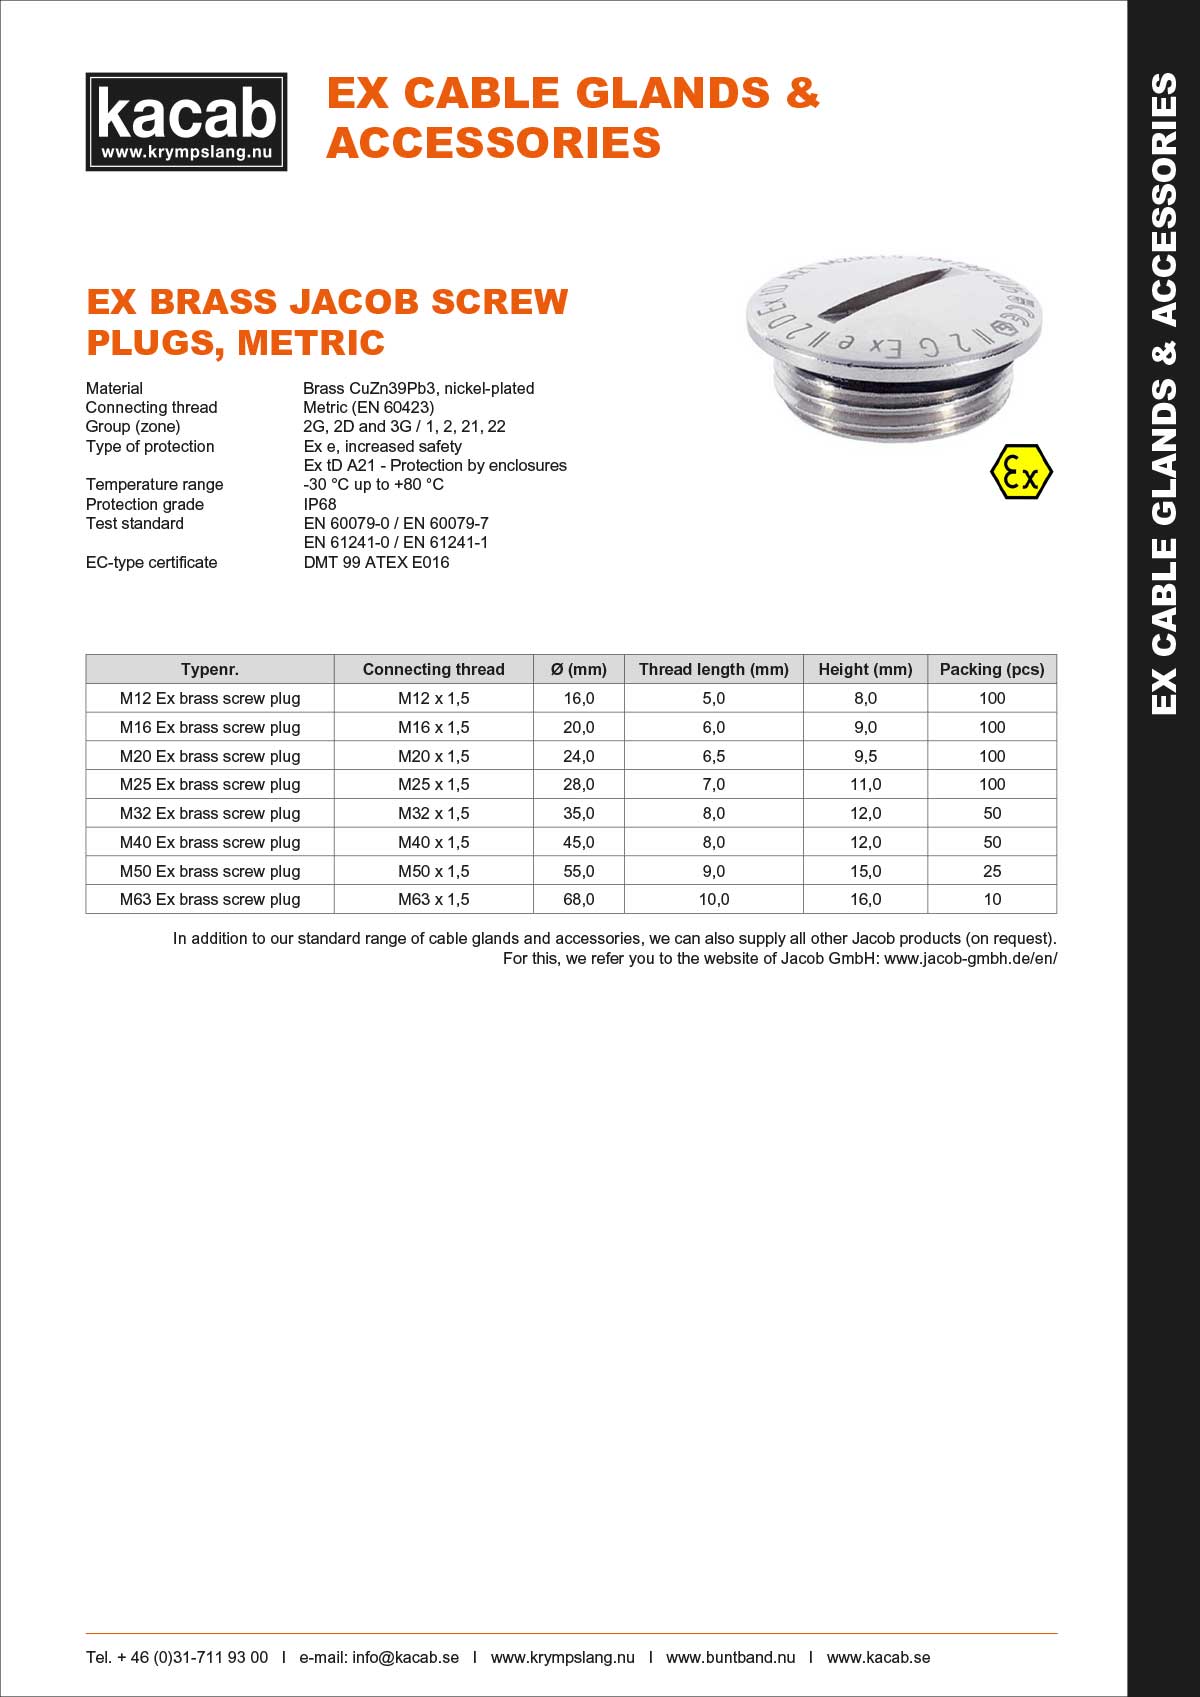 Ex brass Jacob screw plugs - metric